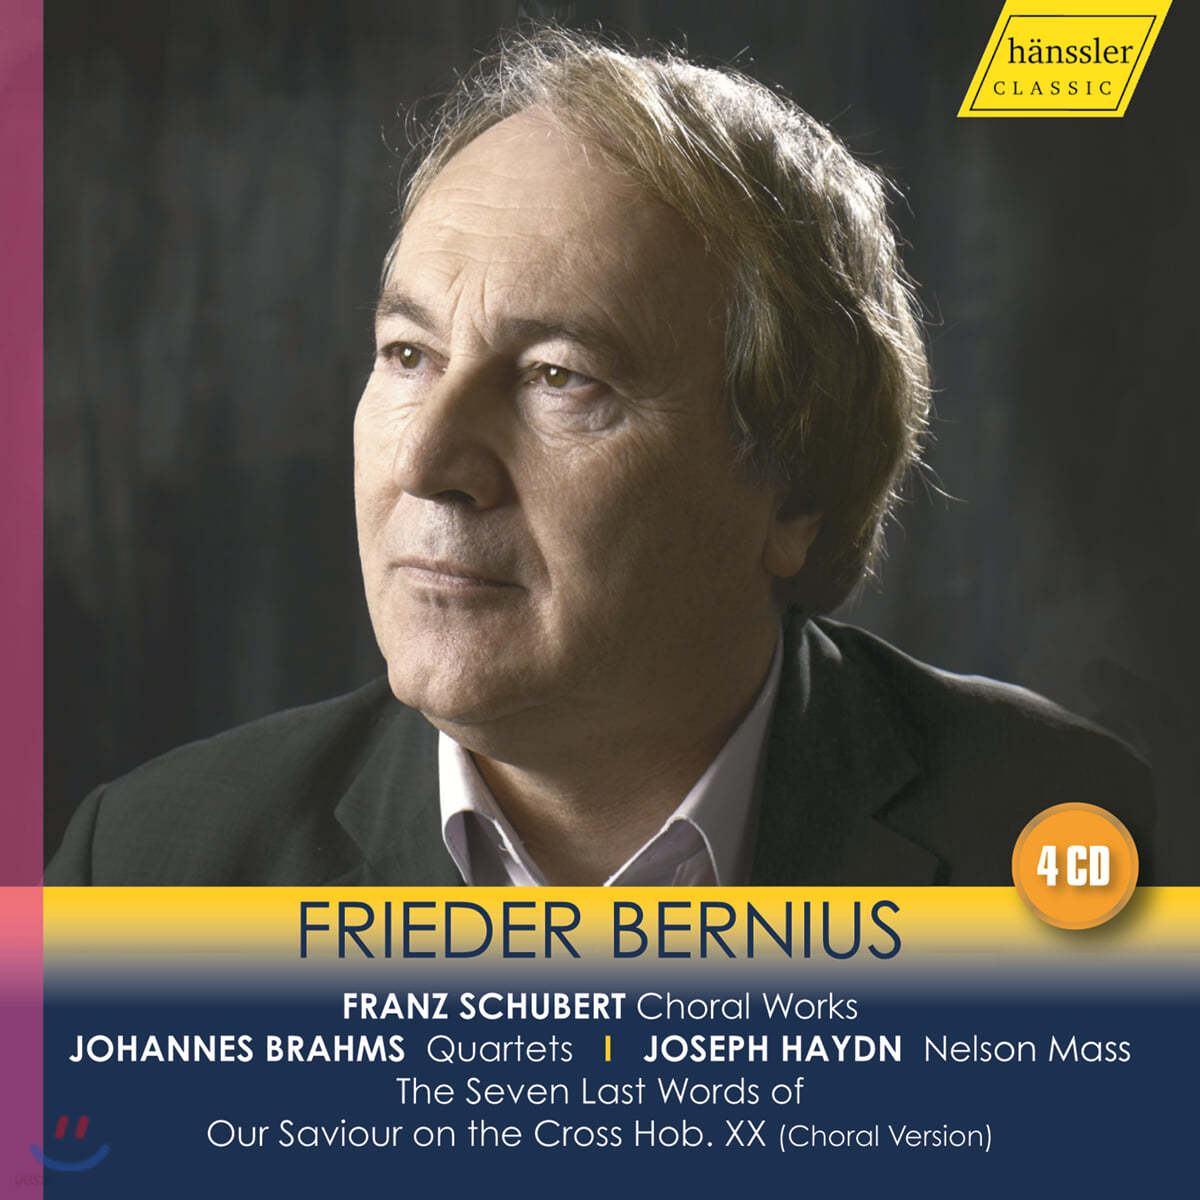 Frieder Bernius 슈베르트 / 브람스 / 하이든의 합창 음악 (Schubert / Brahms / Haydn : Choral Works) 